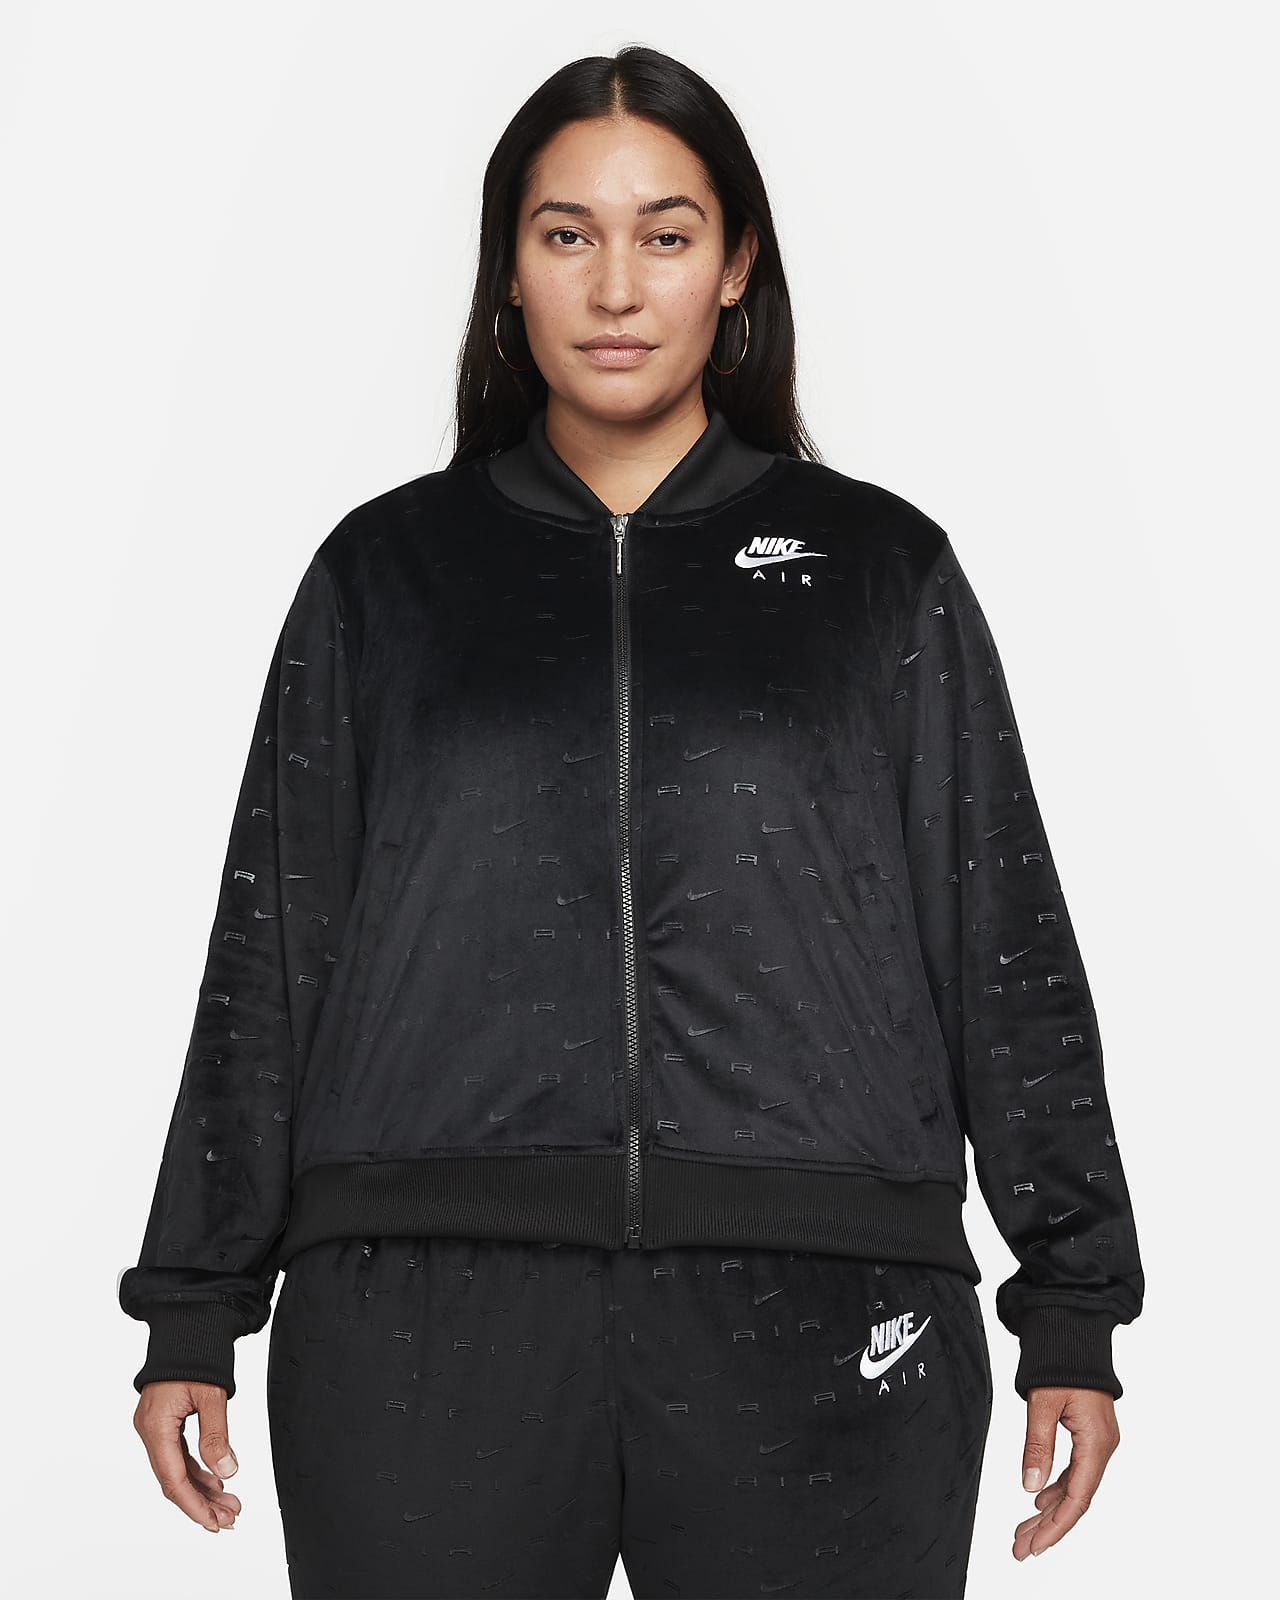 Jacka Nike Air Velour för kvinnor (Plus Size)